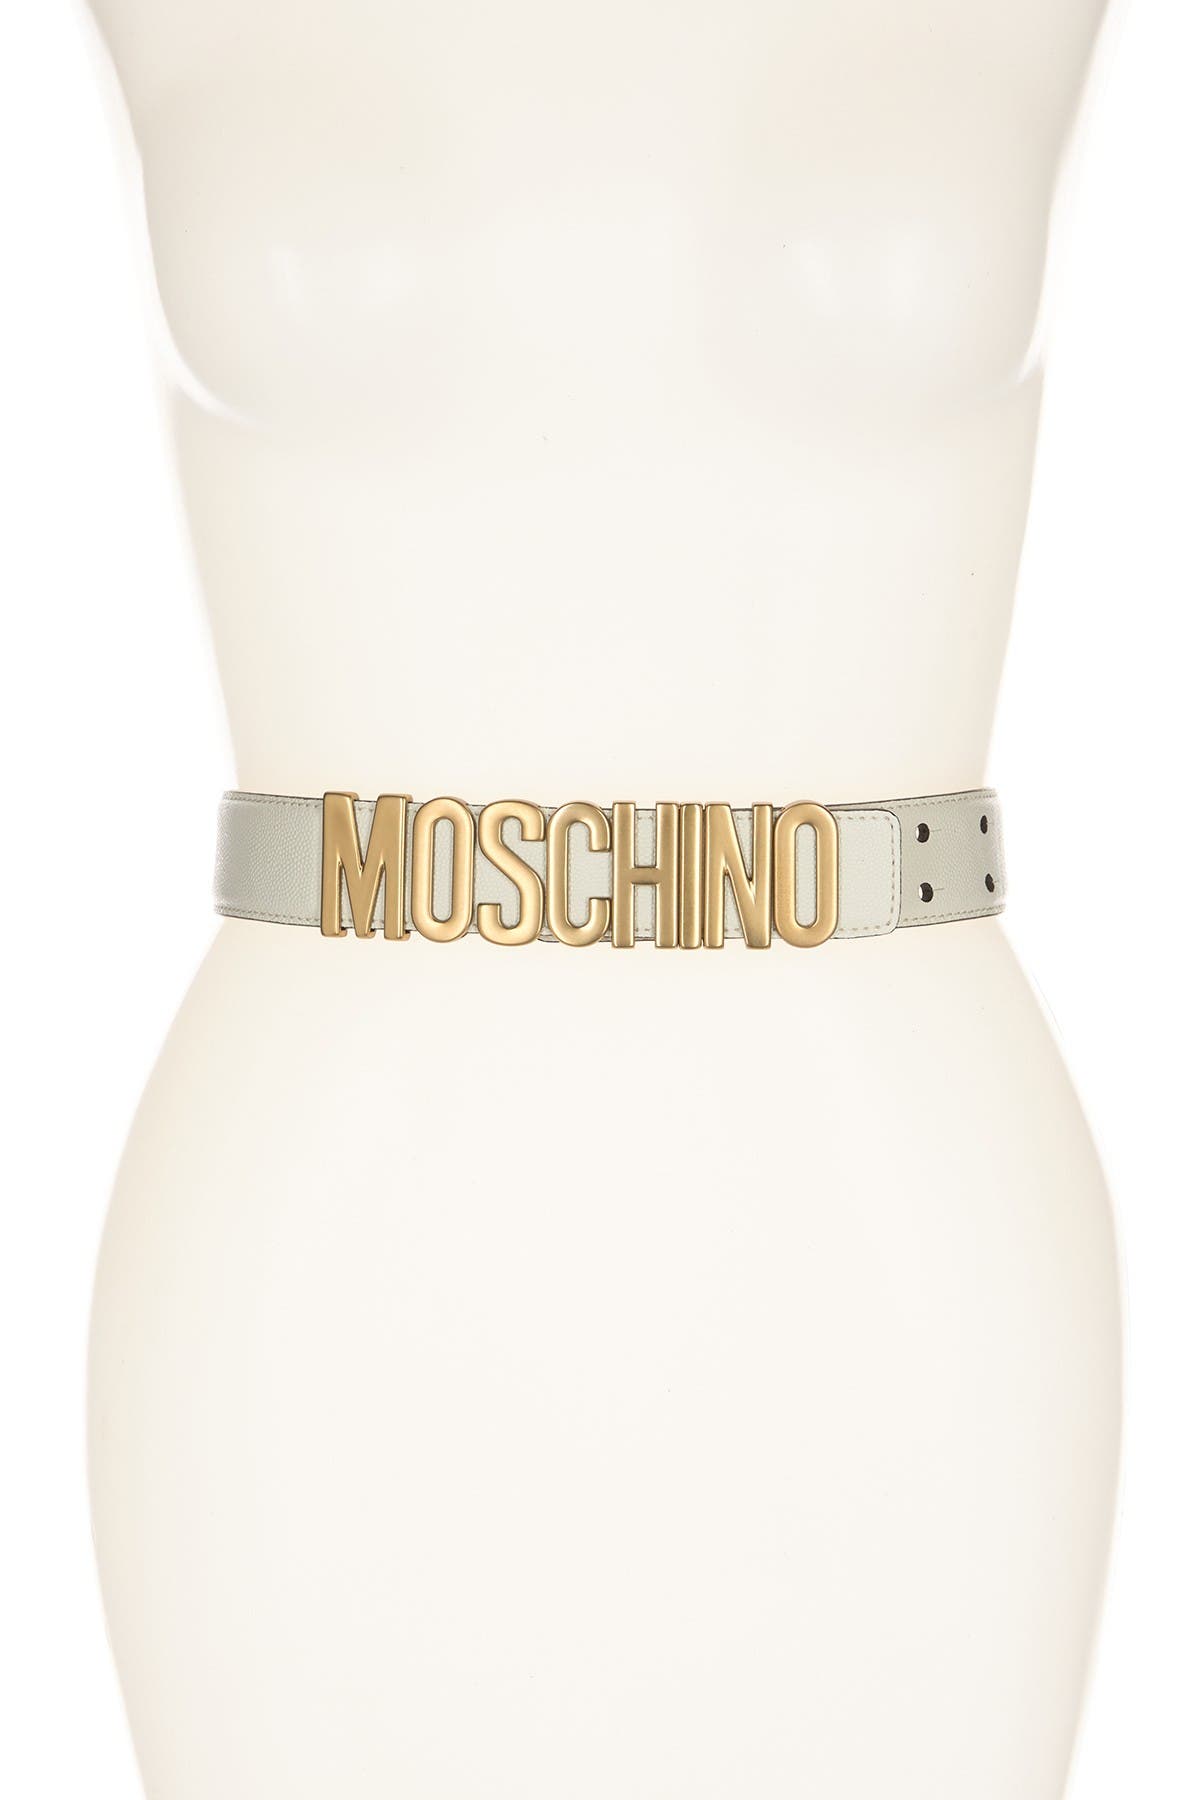 moschino gold belt